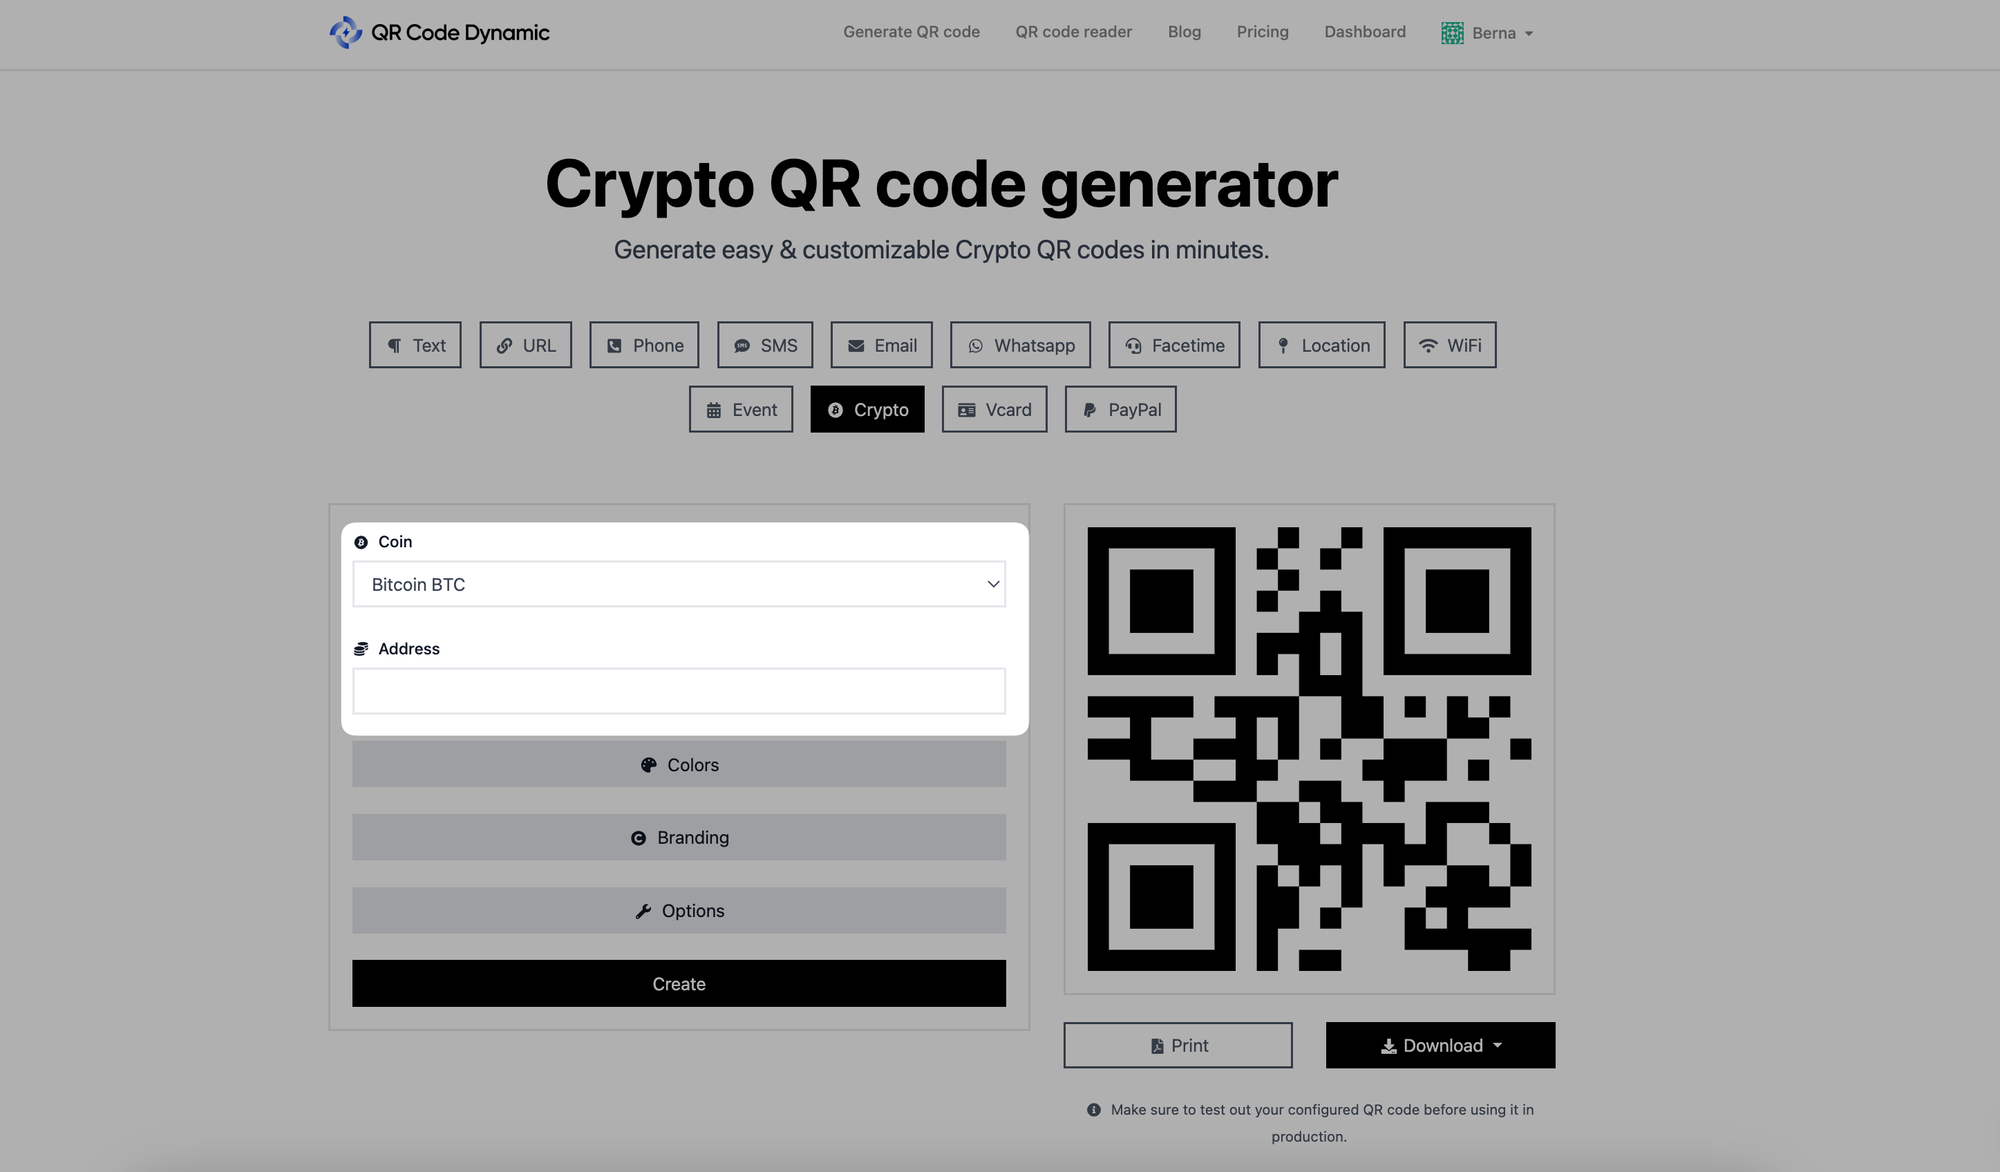 entering crypto qr codes details